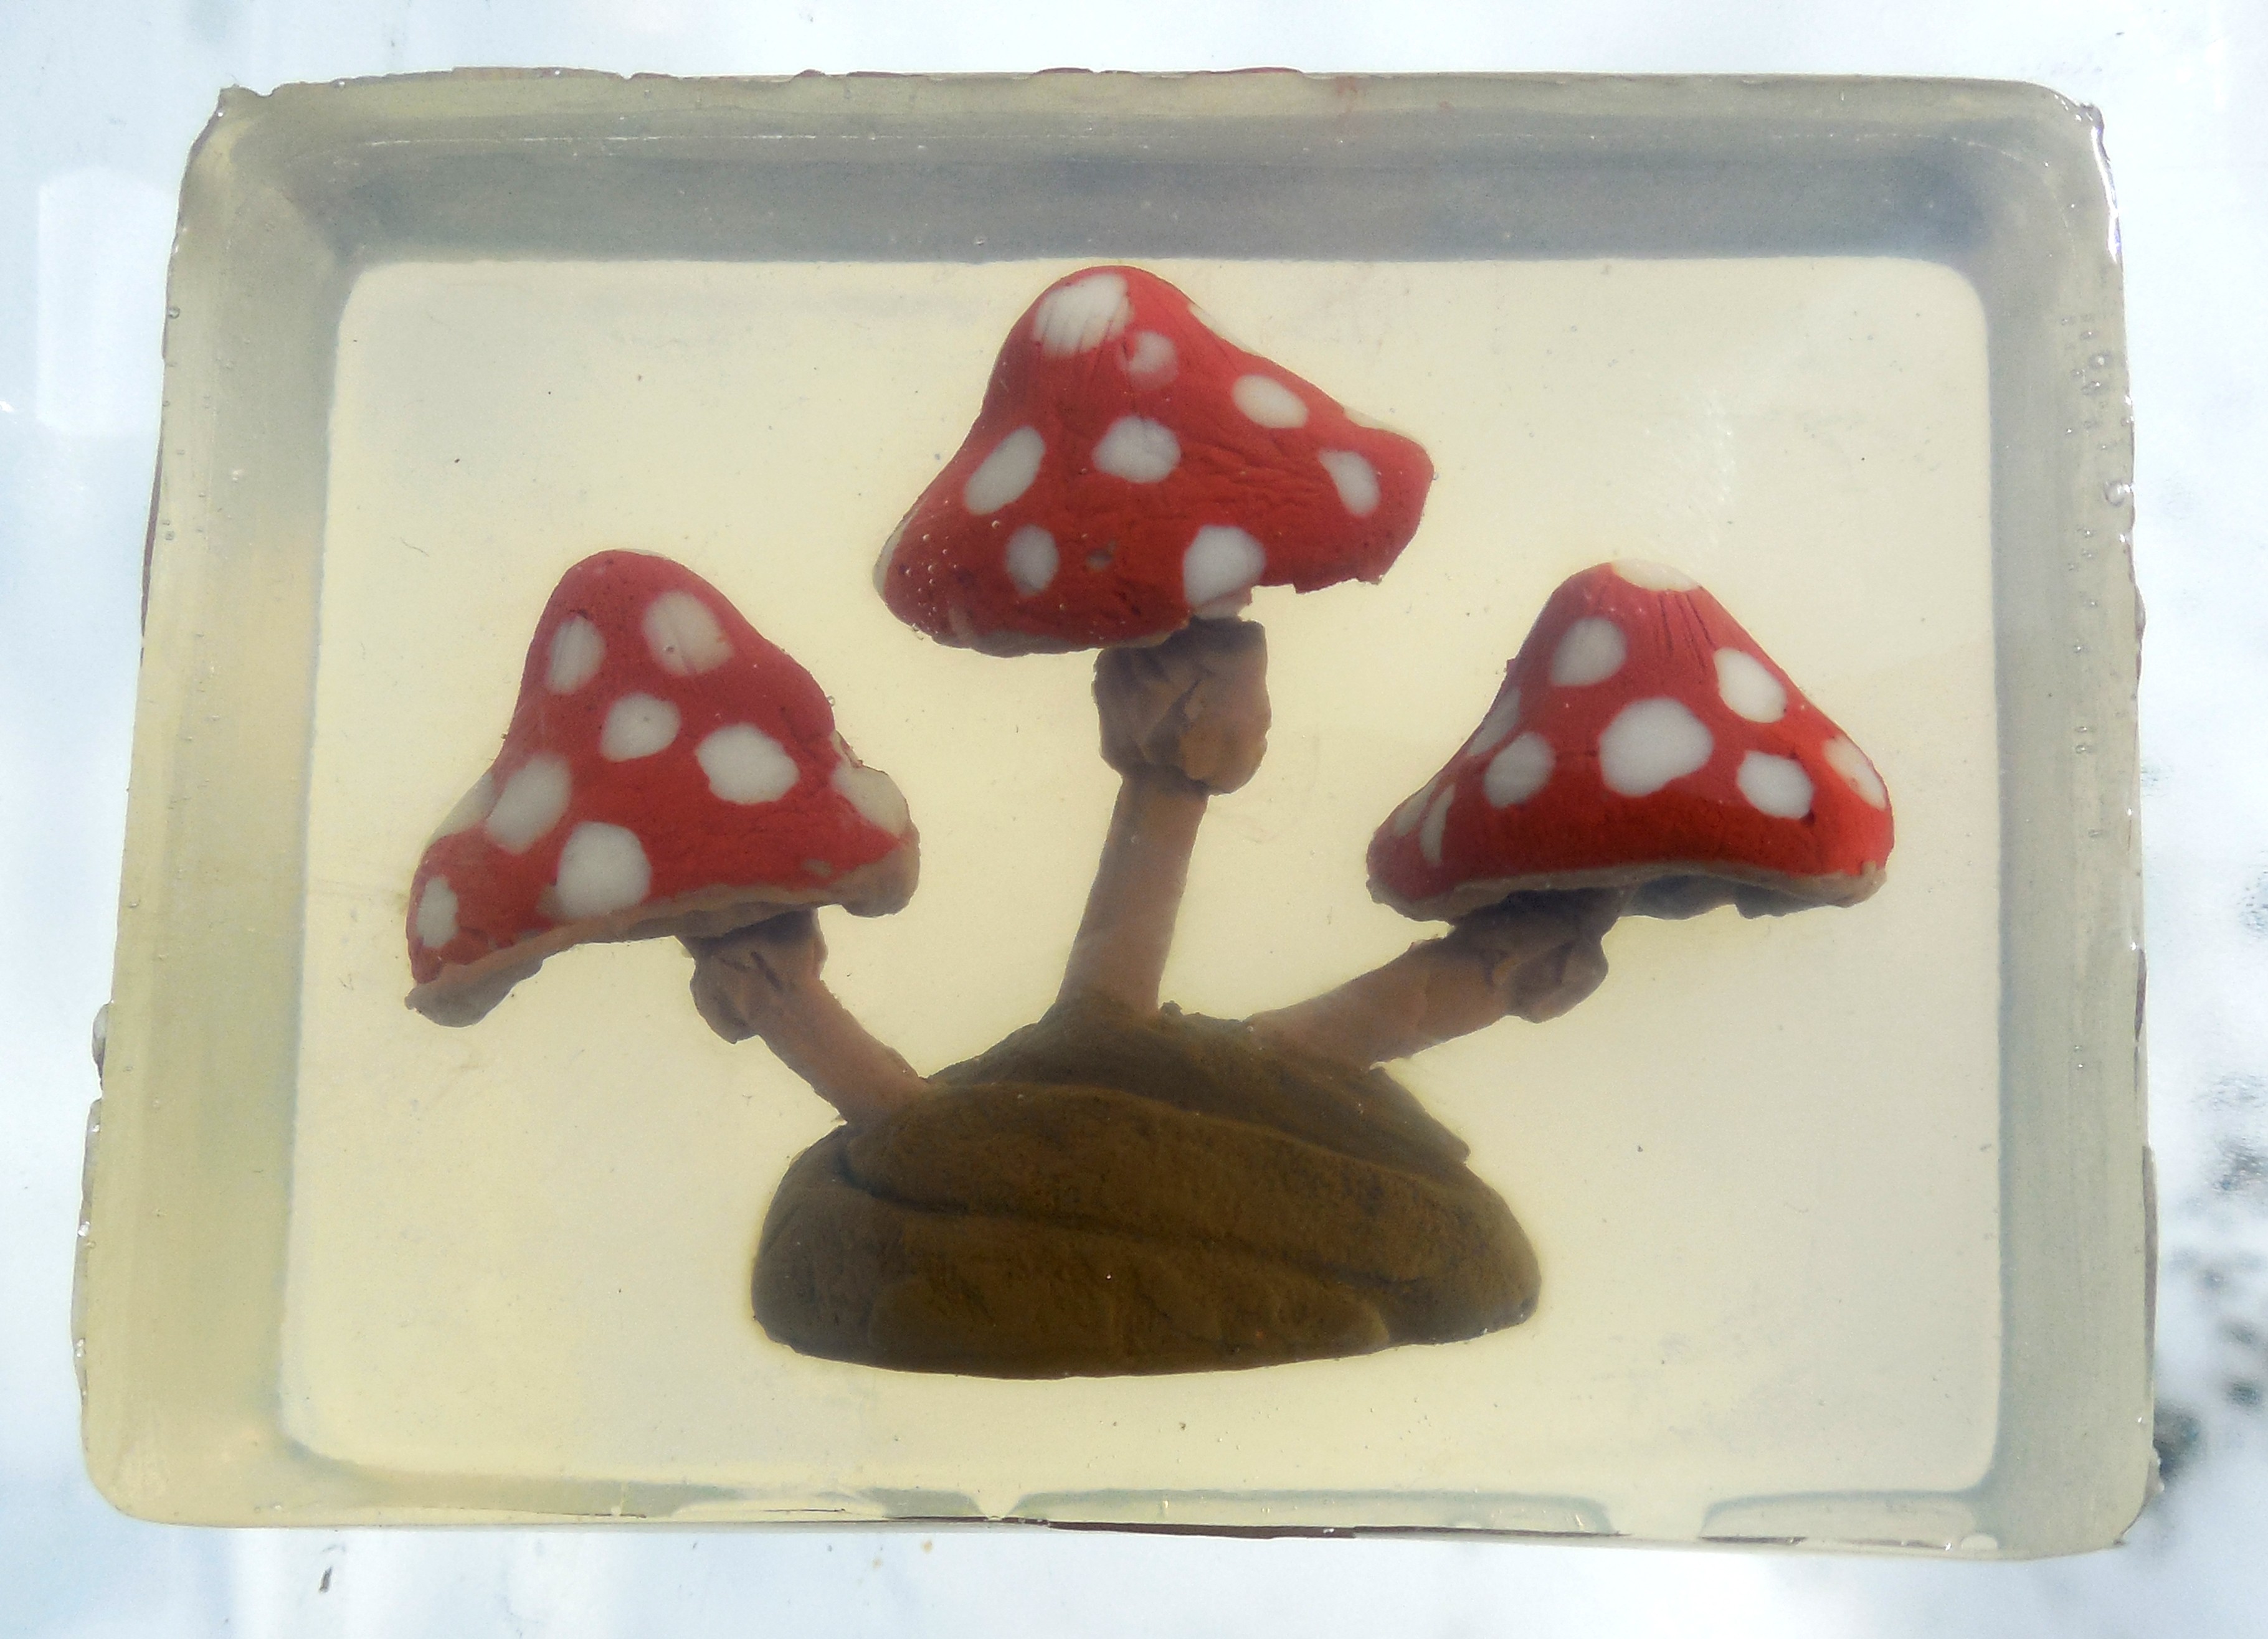 Mushroom Soap "Wild Shrooms"